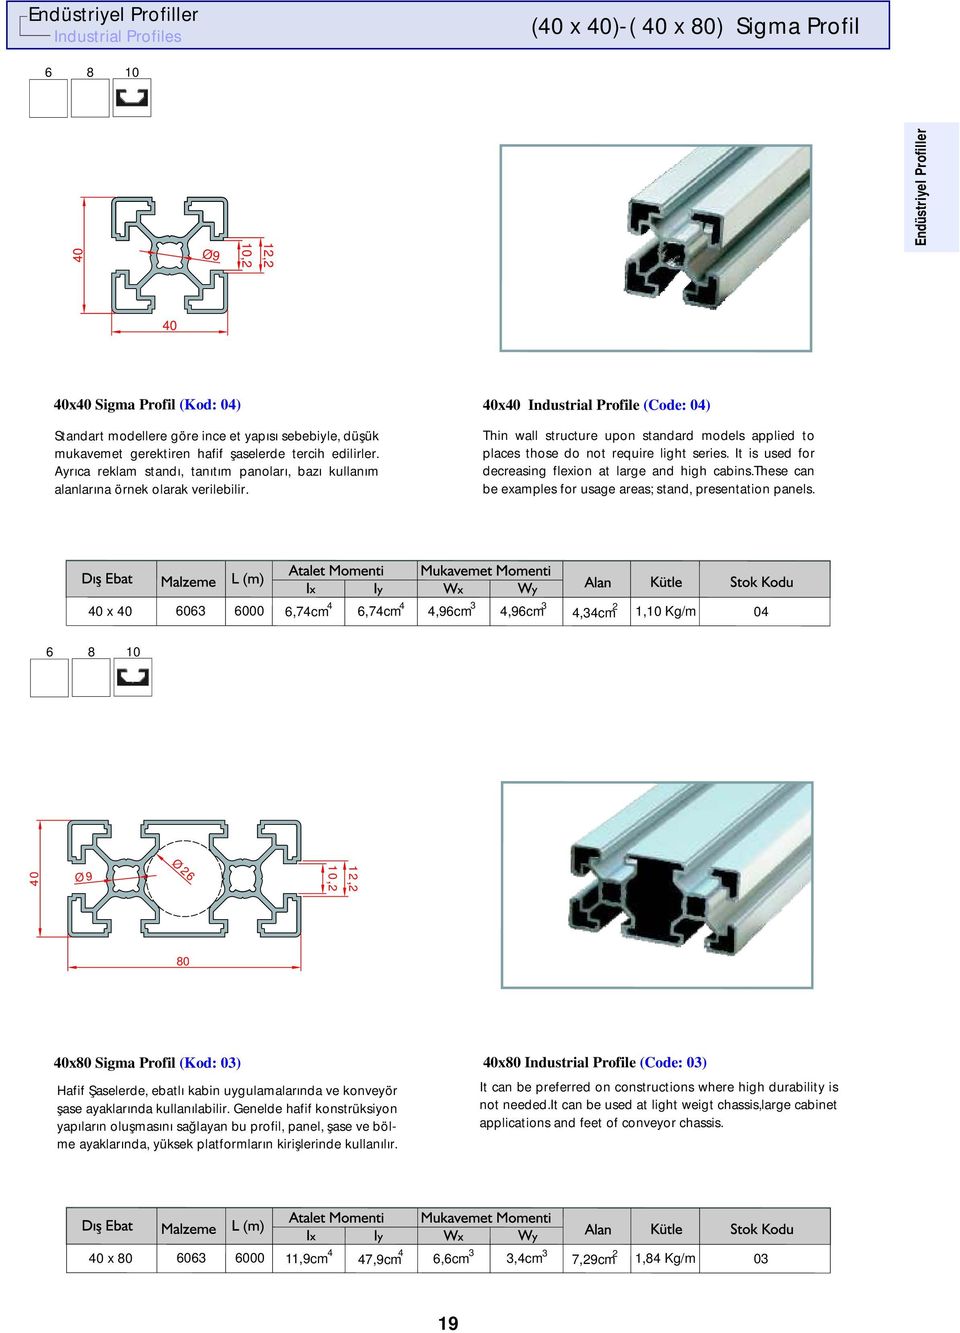 40 x 40 6063 6000 6,74cm 4 6,74cm 4 4,96cm 3 4,96cm 3 4,34cm 2 1,10 Kg/m 04 40 40 Endüstriyel Profiller 40x40 Industrial Profile (Code: 04) Thin wall structure upon standard models applied to places